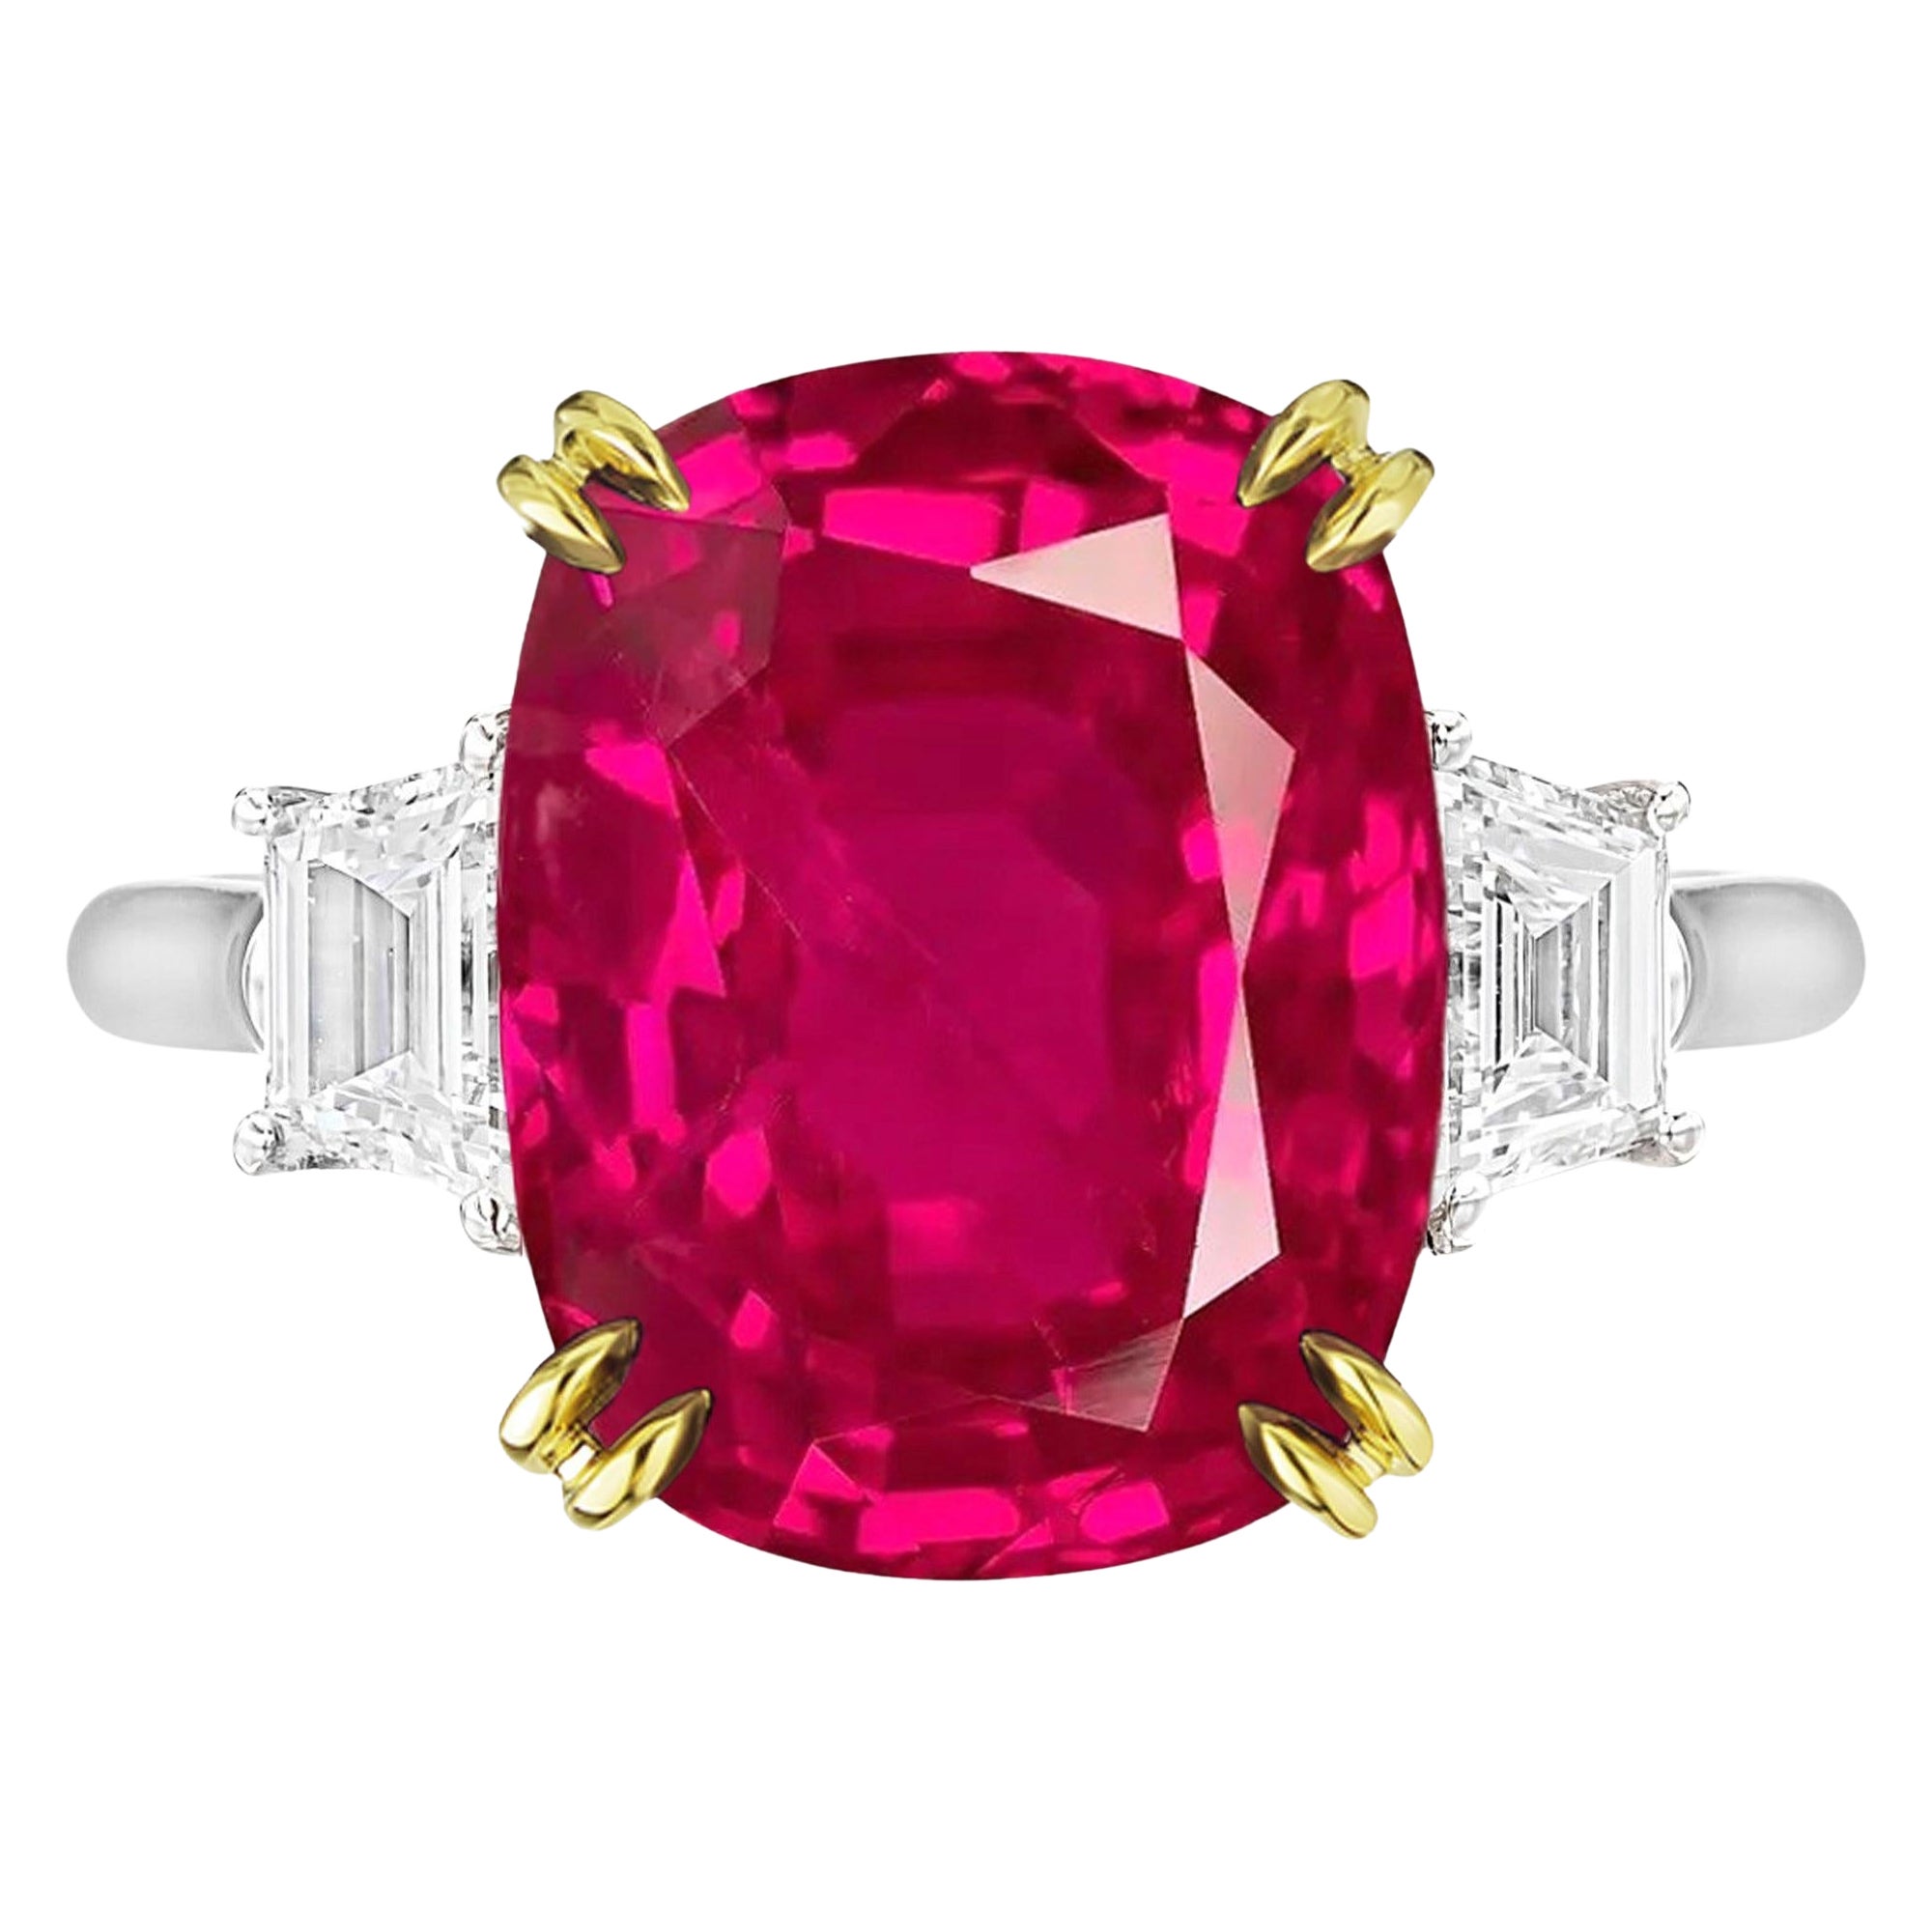 GRS No Heat Certified 5.05 Carat Ruby Cushion Diamond Ring